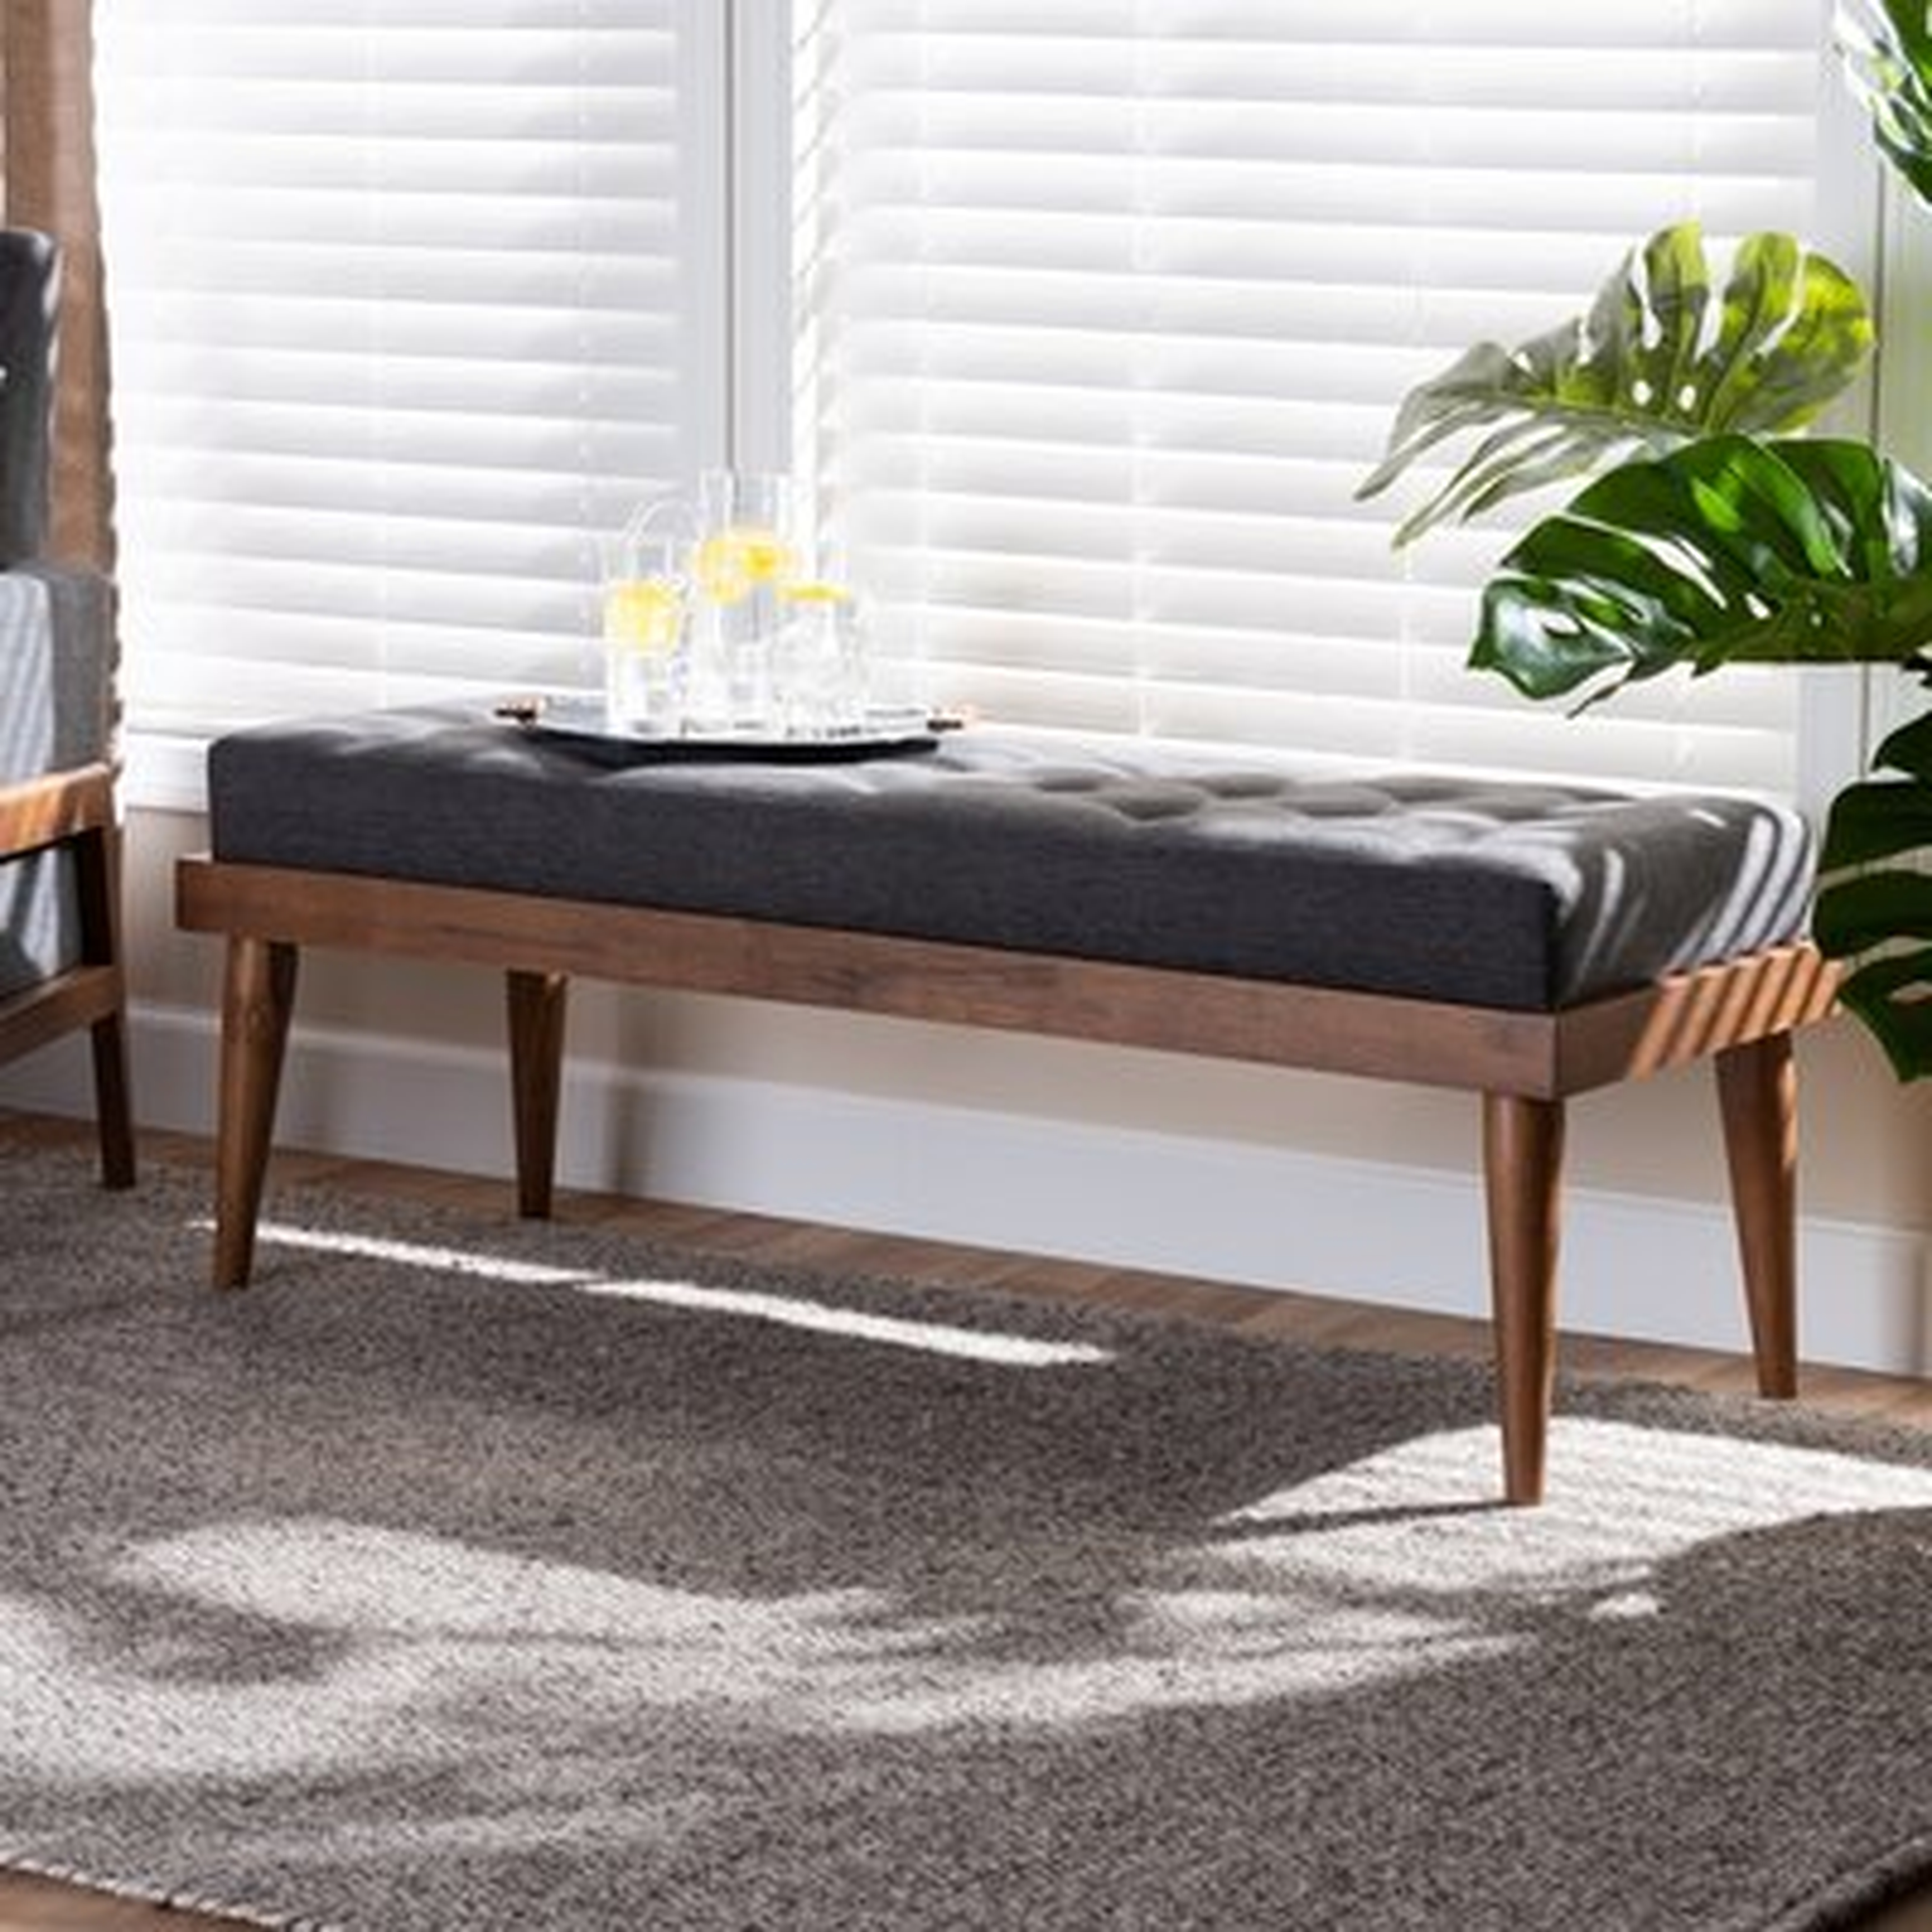 Dirch Mid-Century Modern Dark Grey Fabric Upholstered And Button Tufted Wood Bench - Wayfair